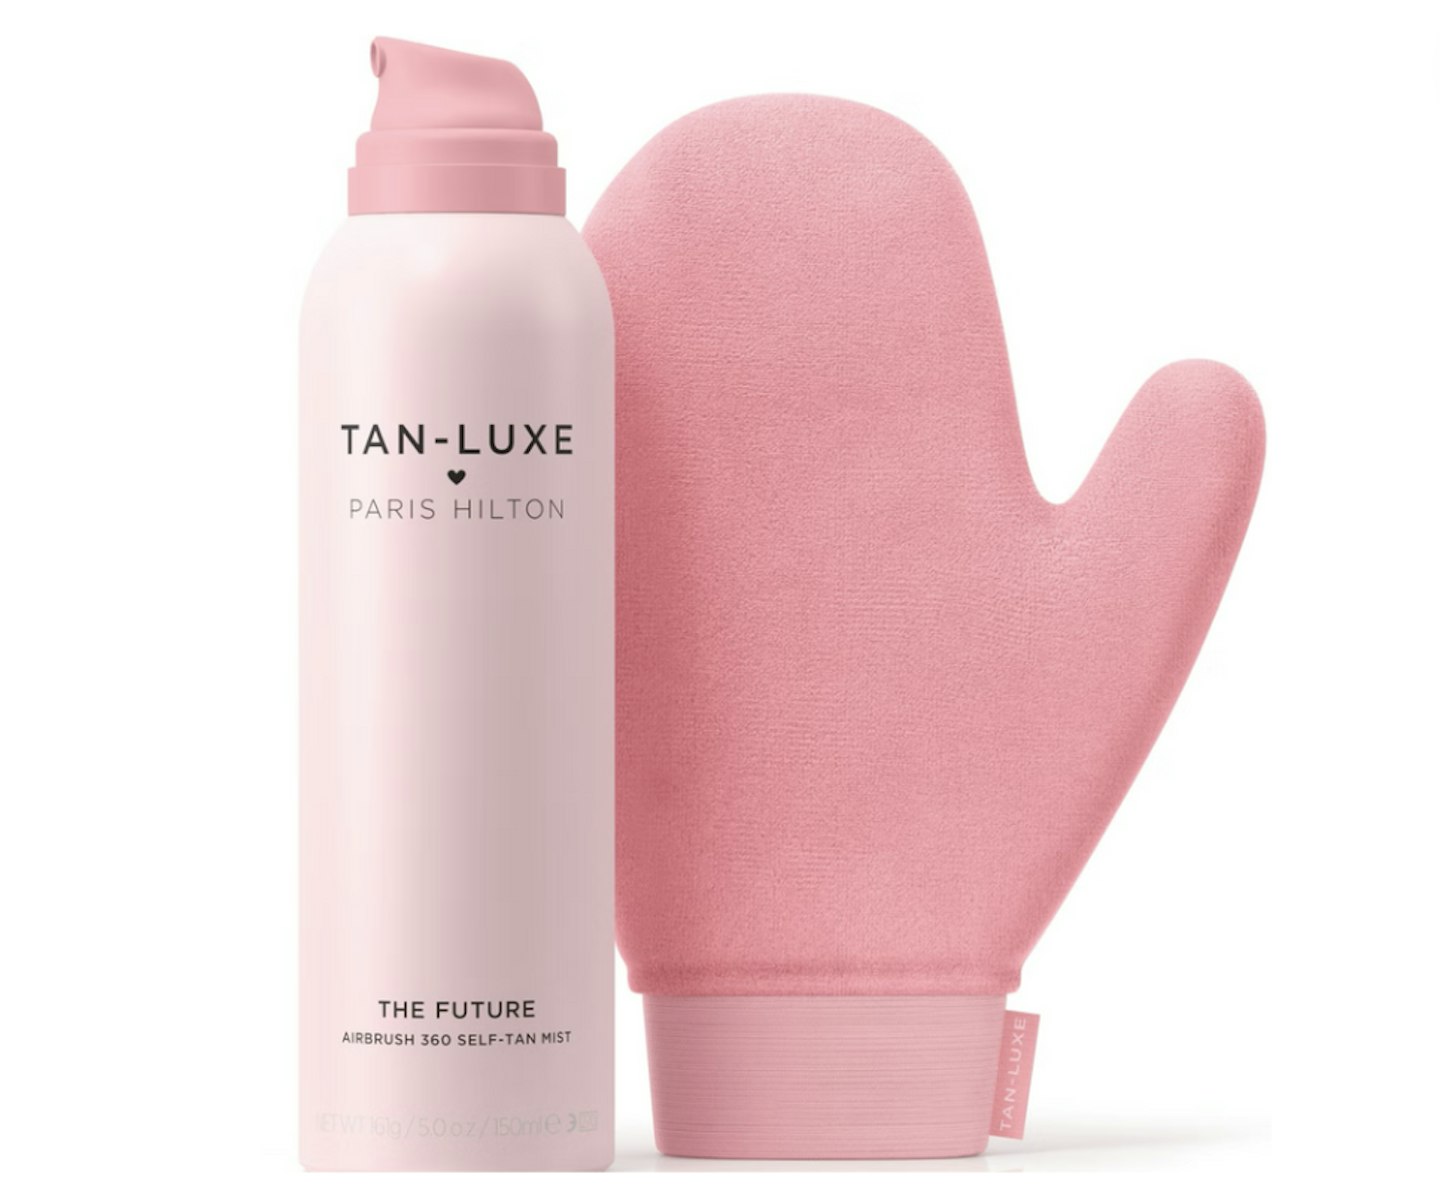 Tanluxe x Paris Hilton The Future Airbrush Tanning Mist